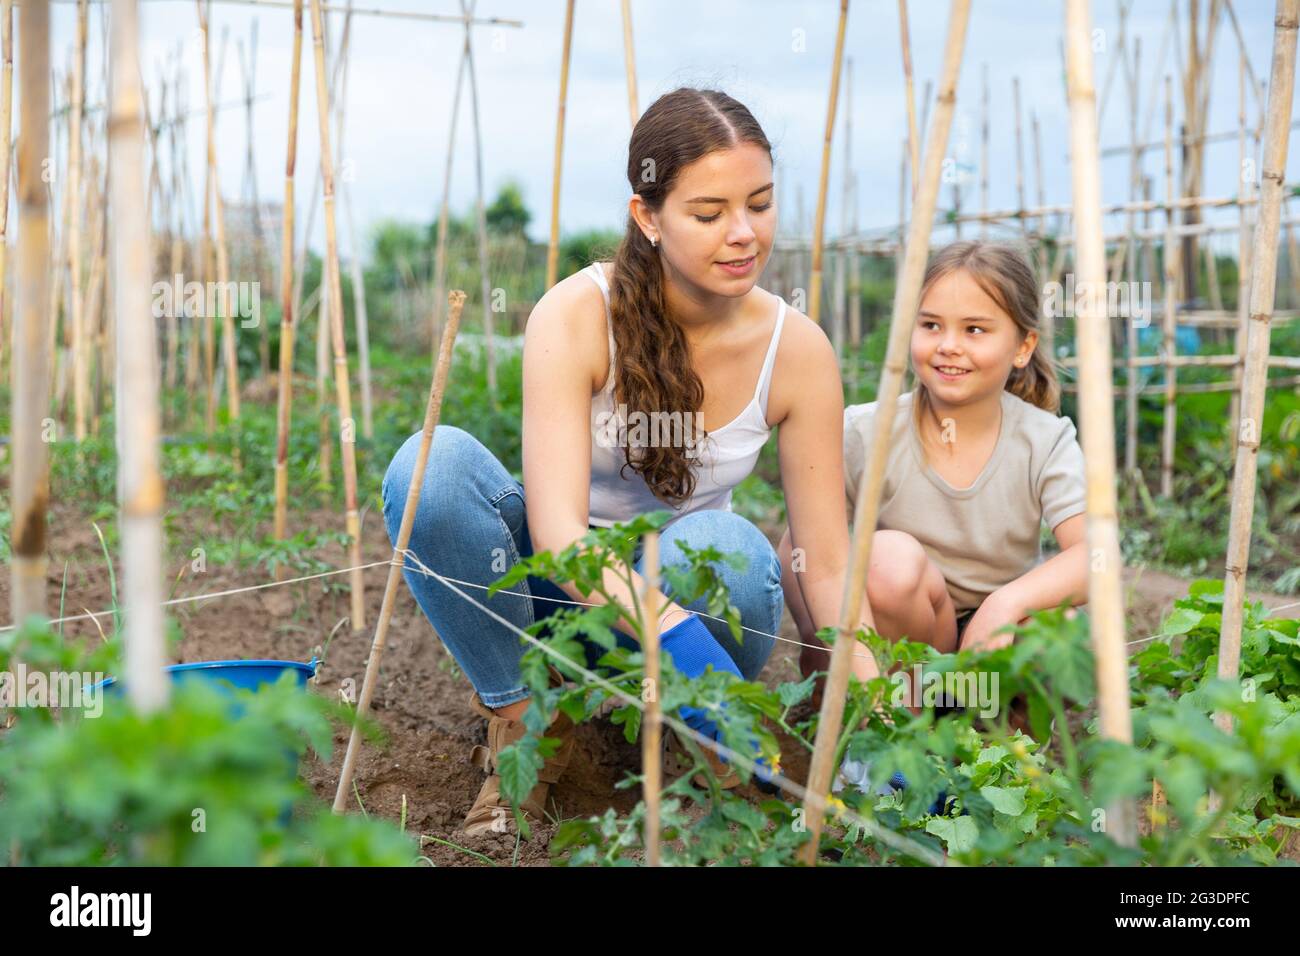 Woman gardener and little girl planting seedlings at a garden Stock Photo